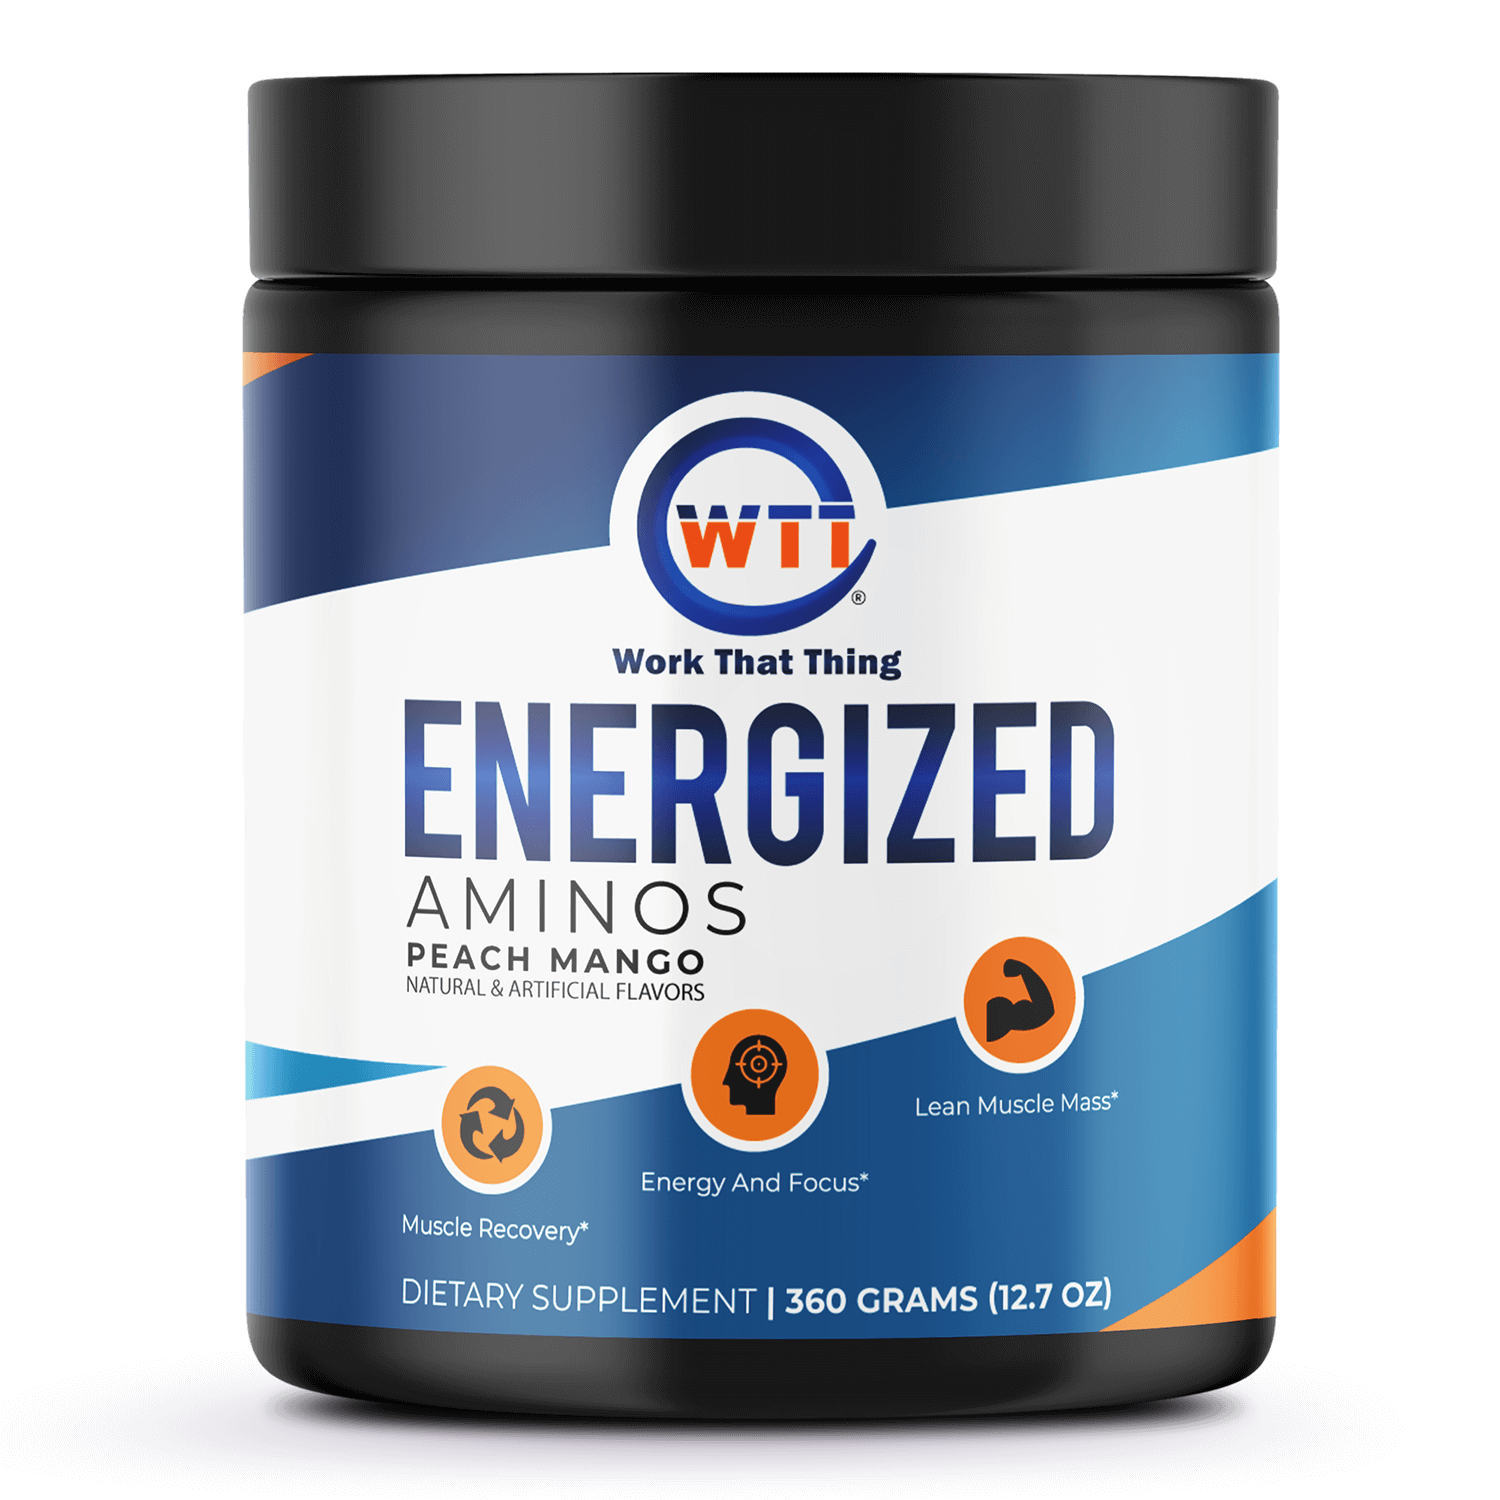 Energized Aminos Peach Mango 360g – 40 servings